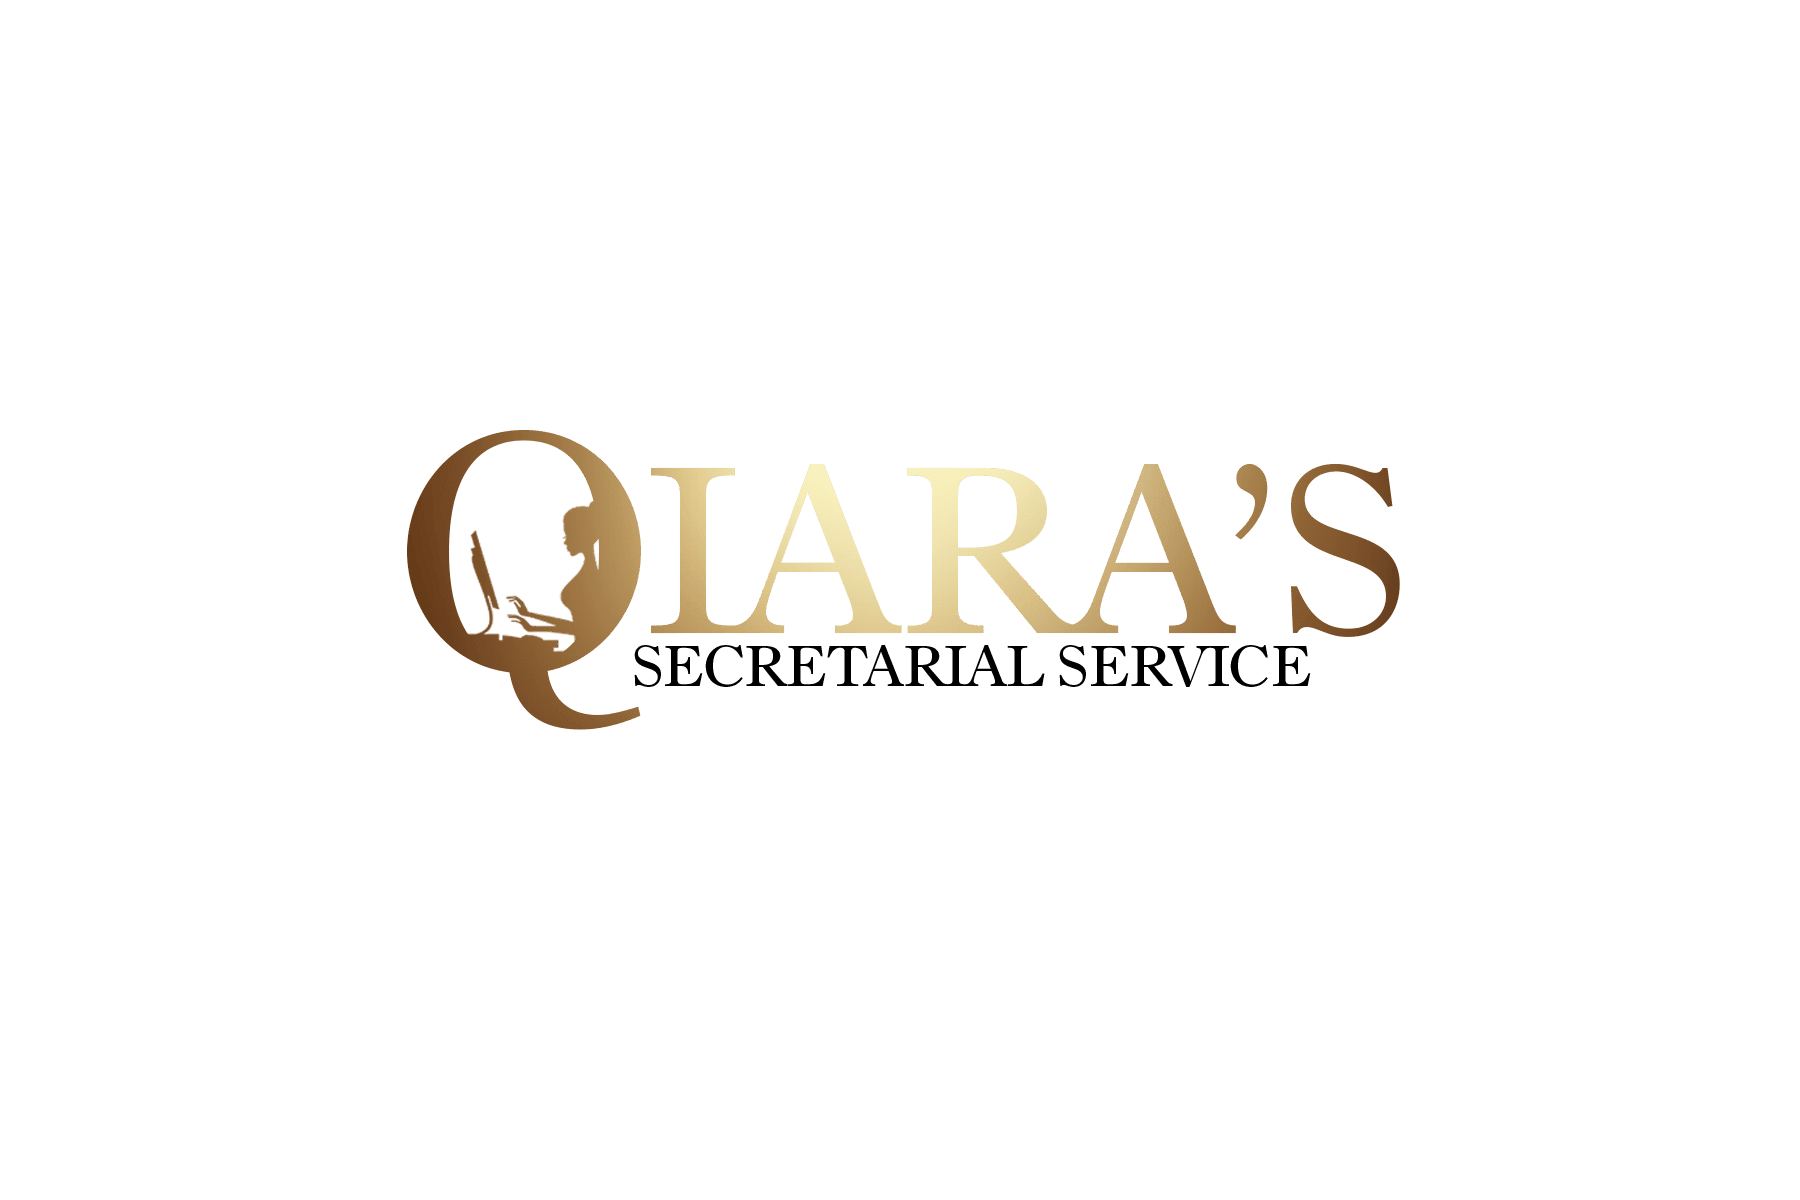 Qiaras VA Service